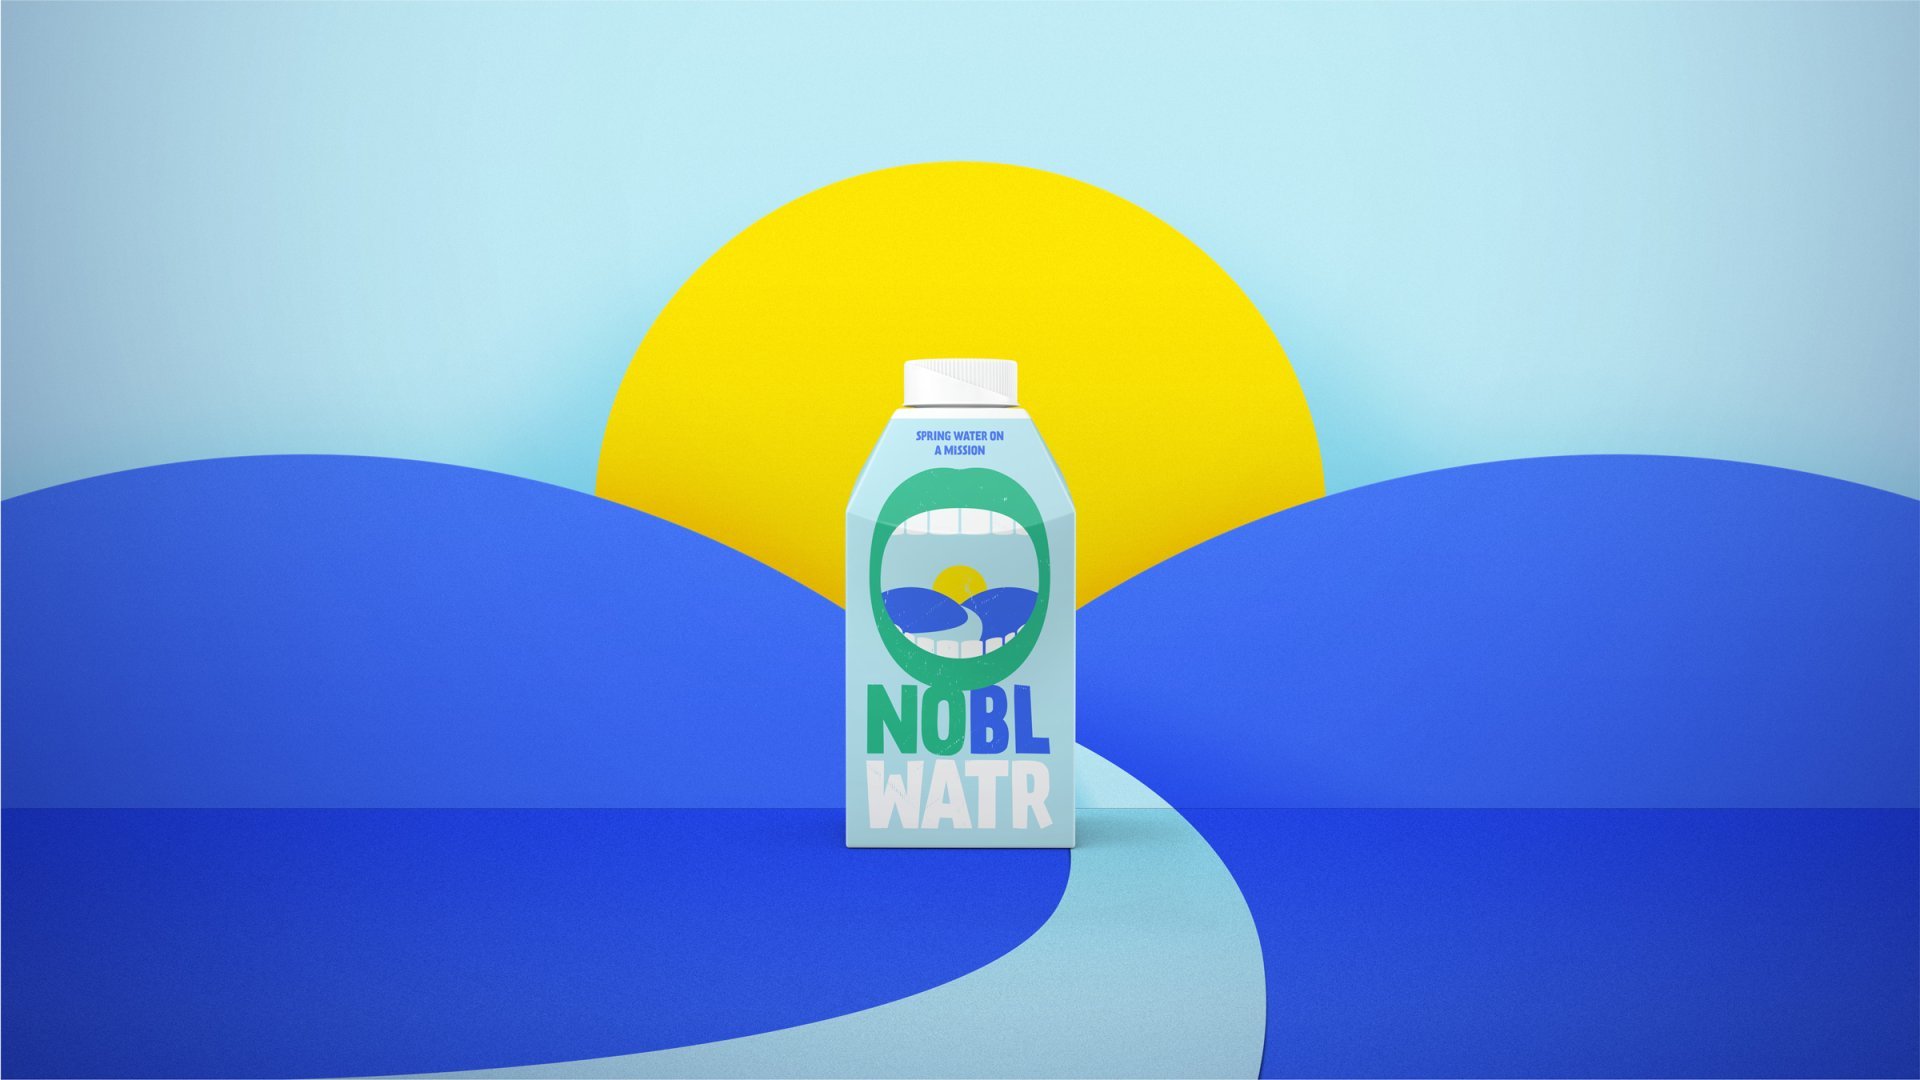 Kuba&Friends’ Nobl Water Rebrand Cuts Through The Greenwashing BS